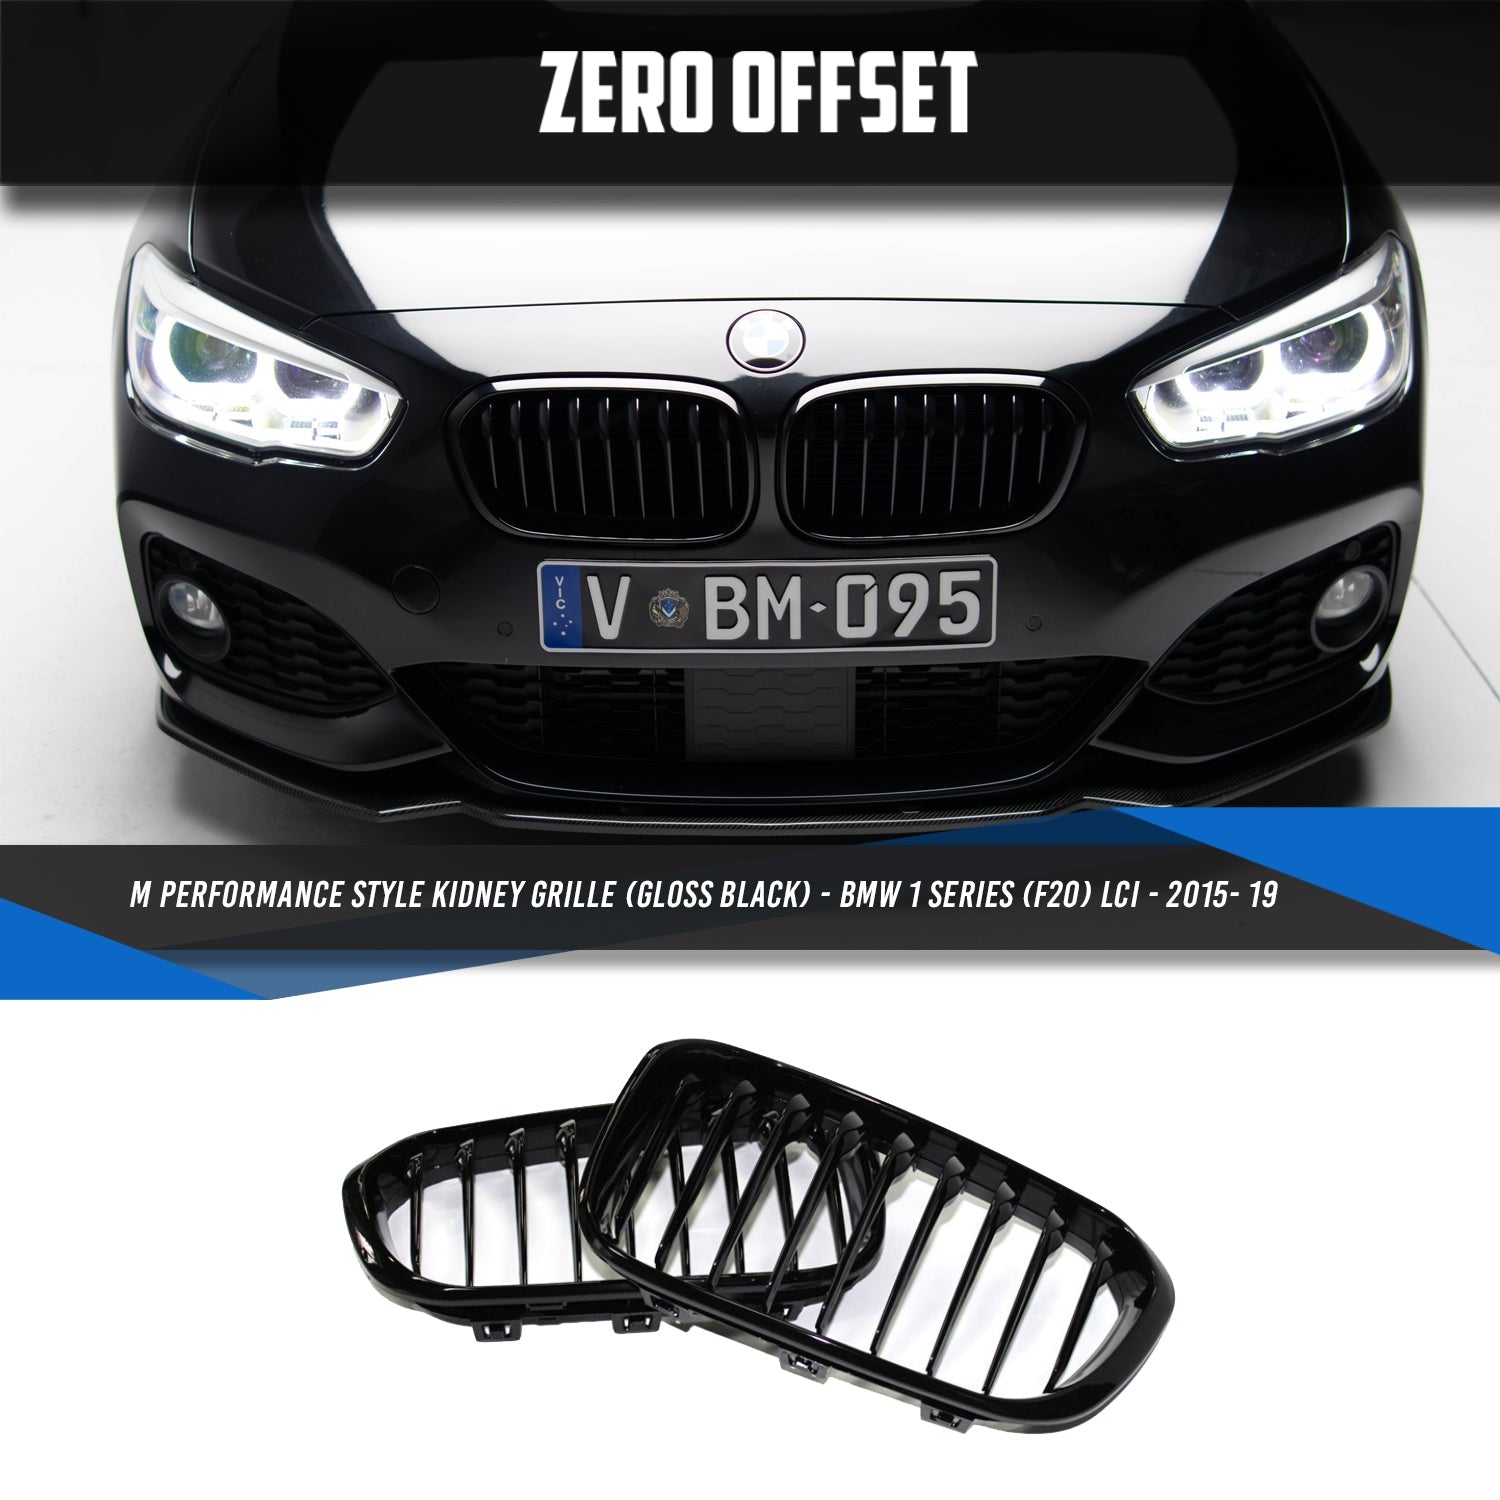 Zero Offset M Performance Style Gloss Black Grill (Single Slat) For BMW 1  Series F20 15-19